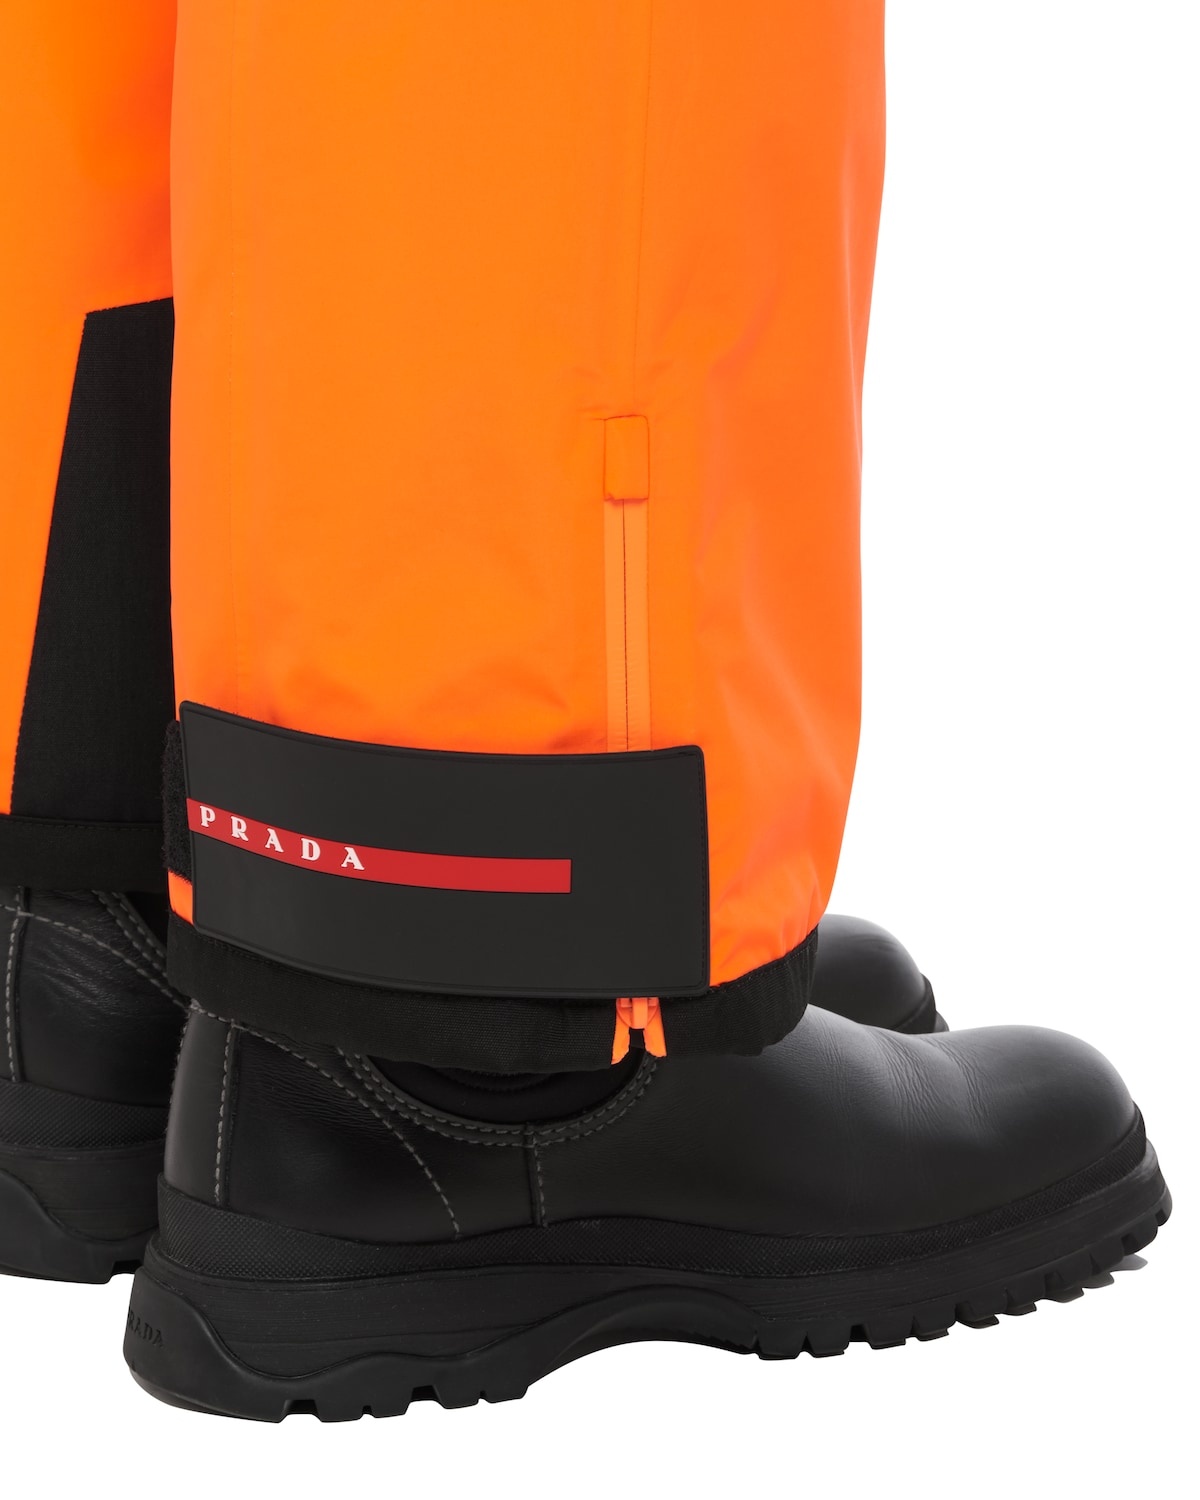 GORE-TEX ski pants - 5